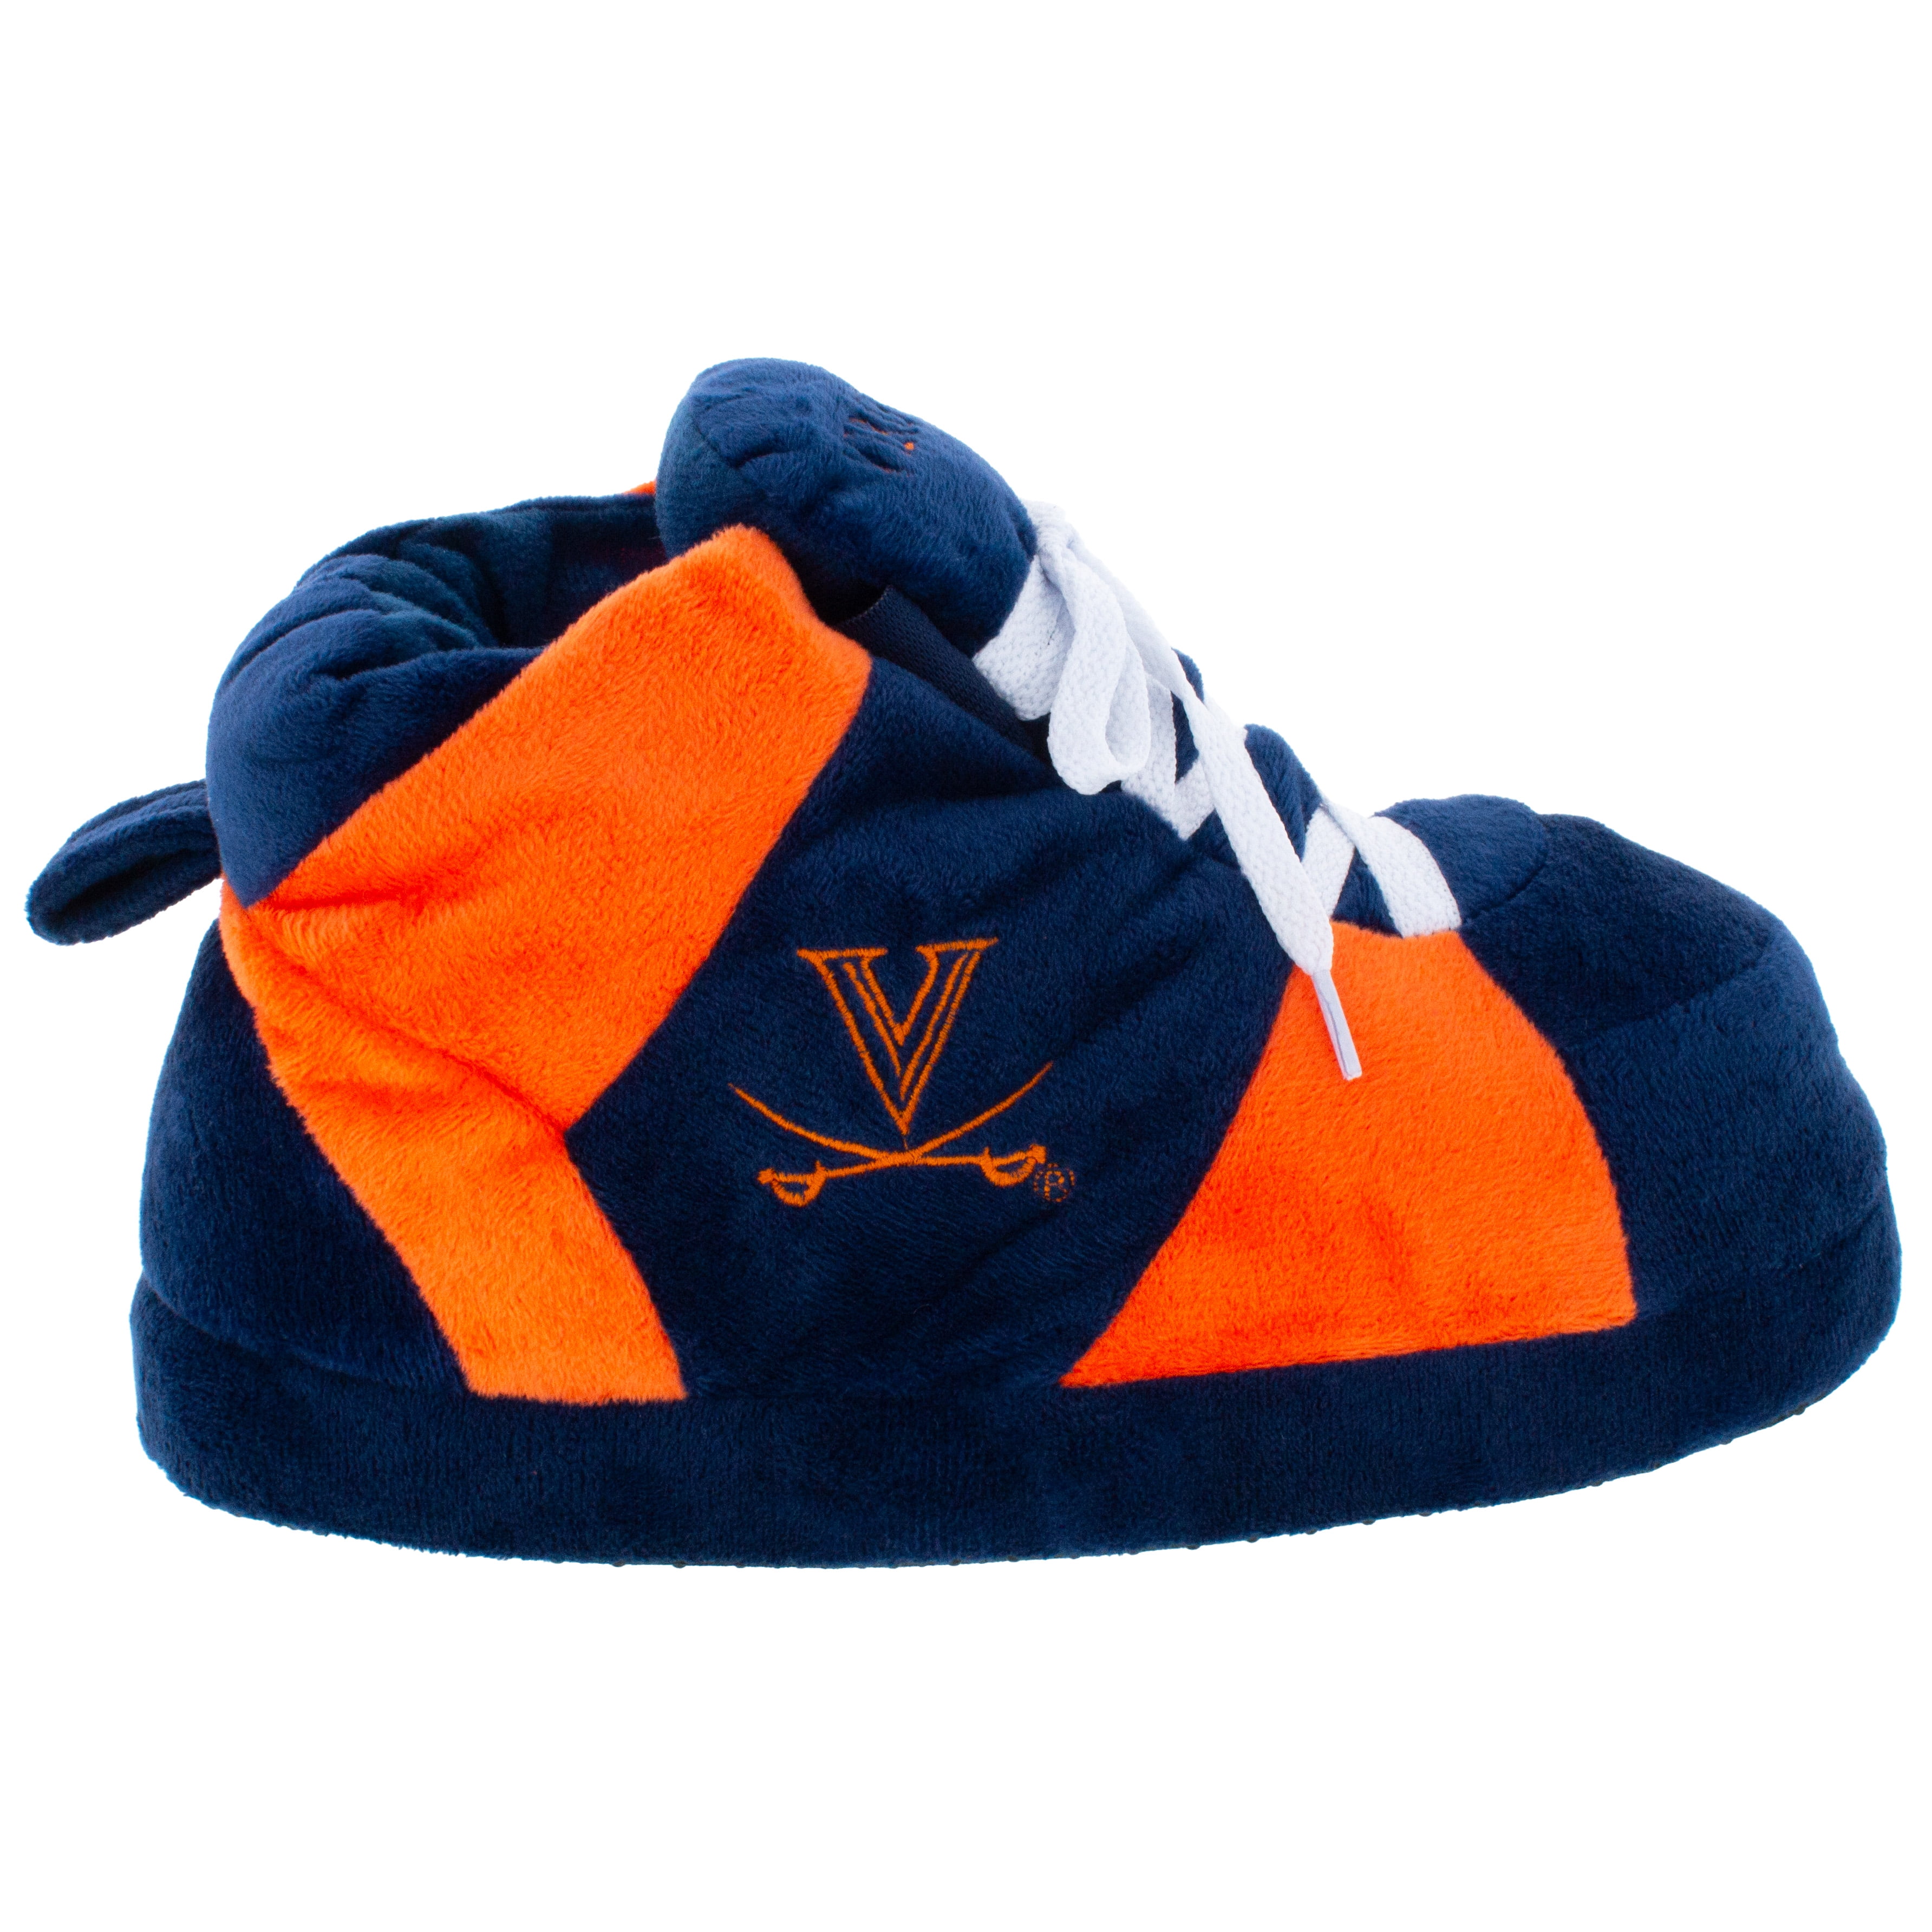 Virginia Cavaliers Original Slipper, Sneaker Comfy Large Feet